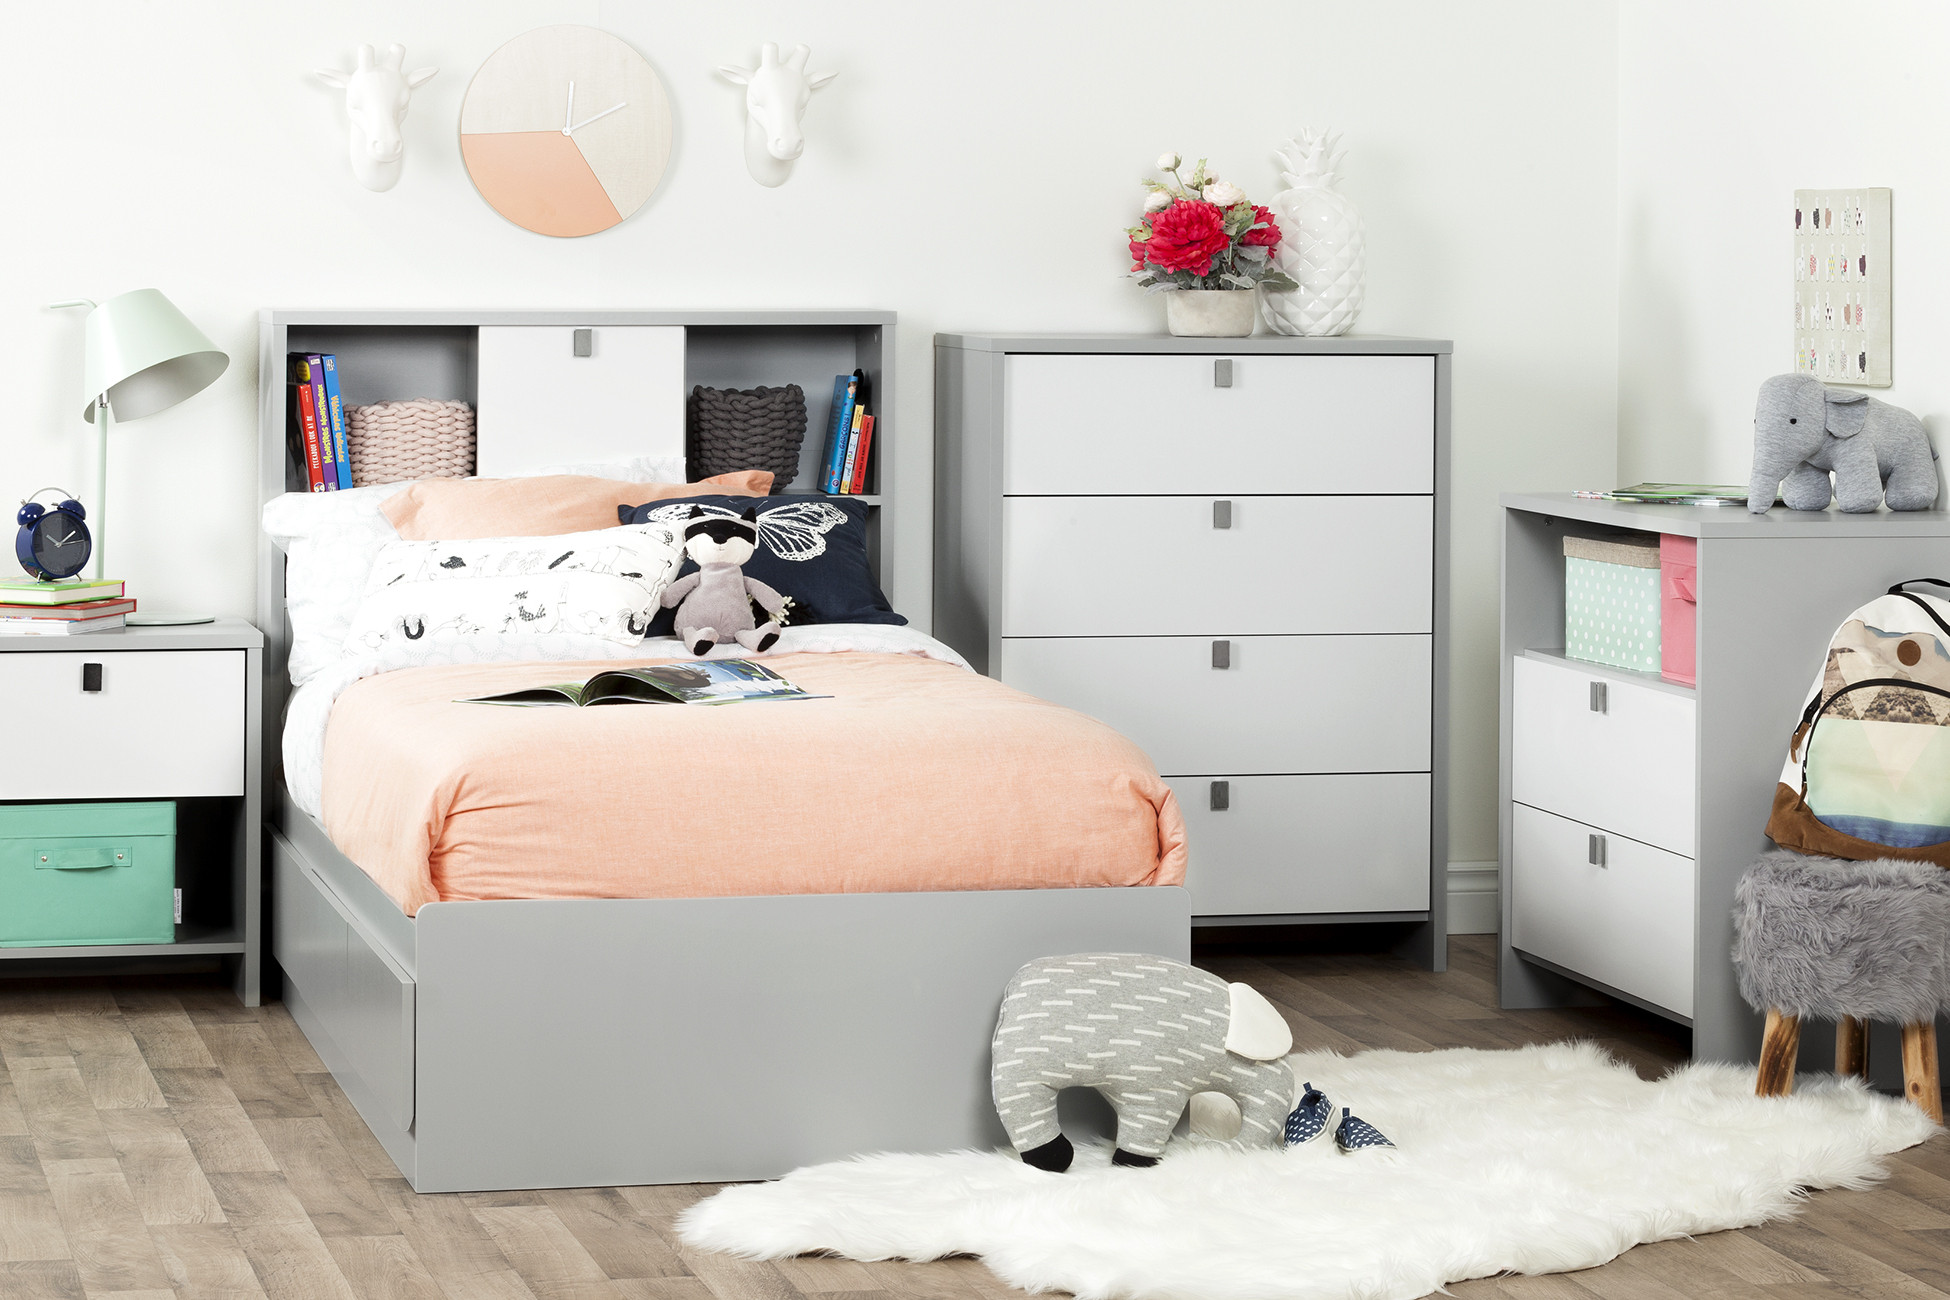 Kids Bedroom Sets Walmart
 South Shore Cookie Kids and Baby Bedroom Furniture